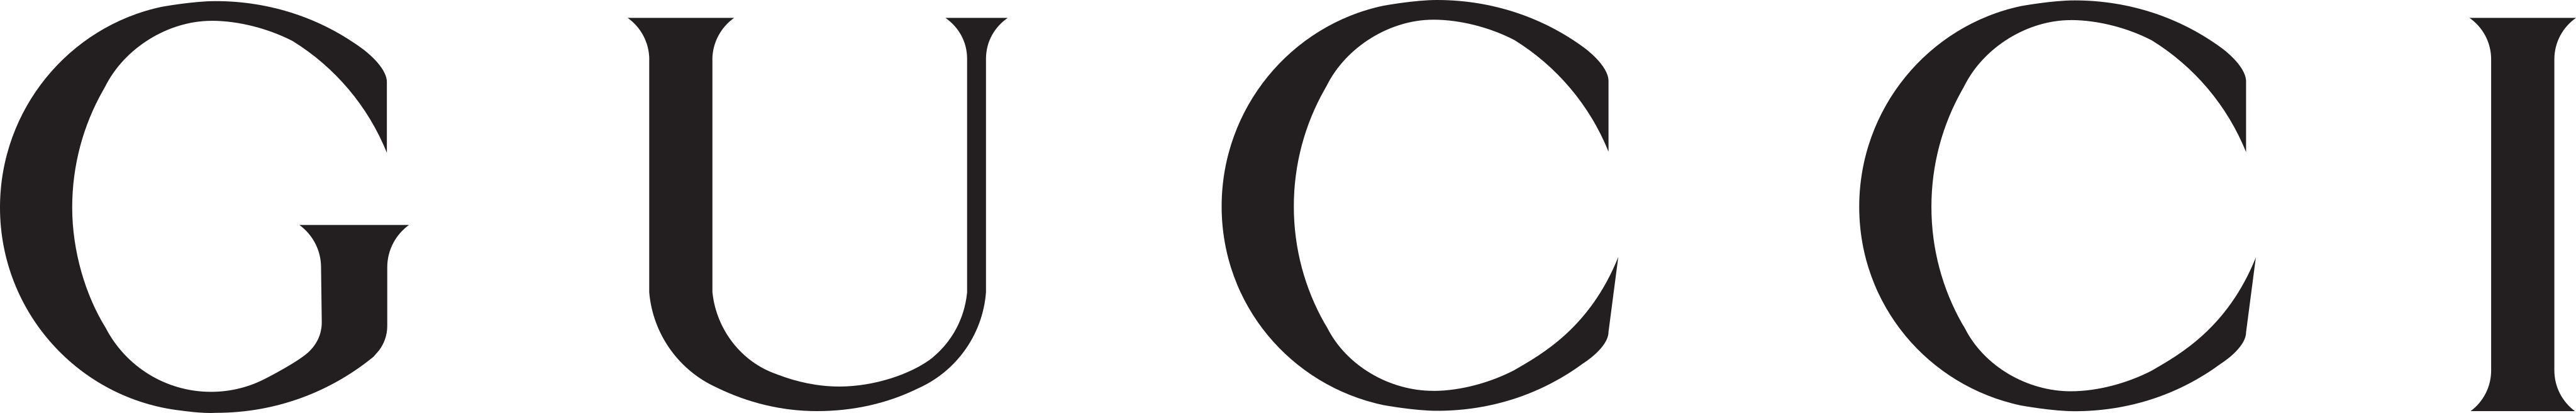 gucci logo 1 - Gucci Logo